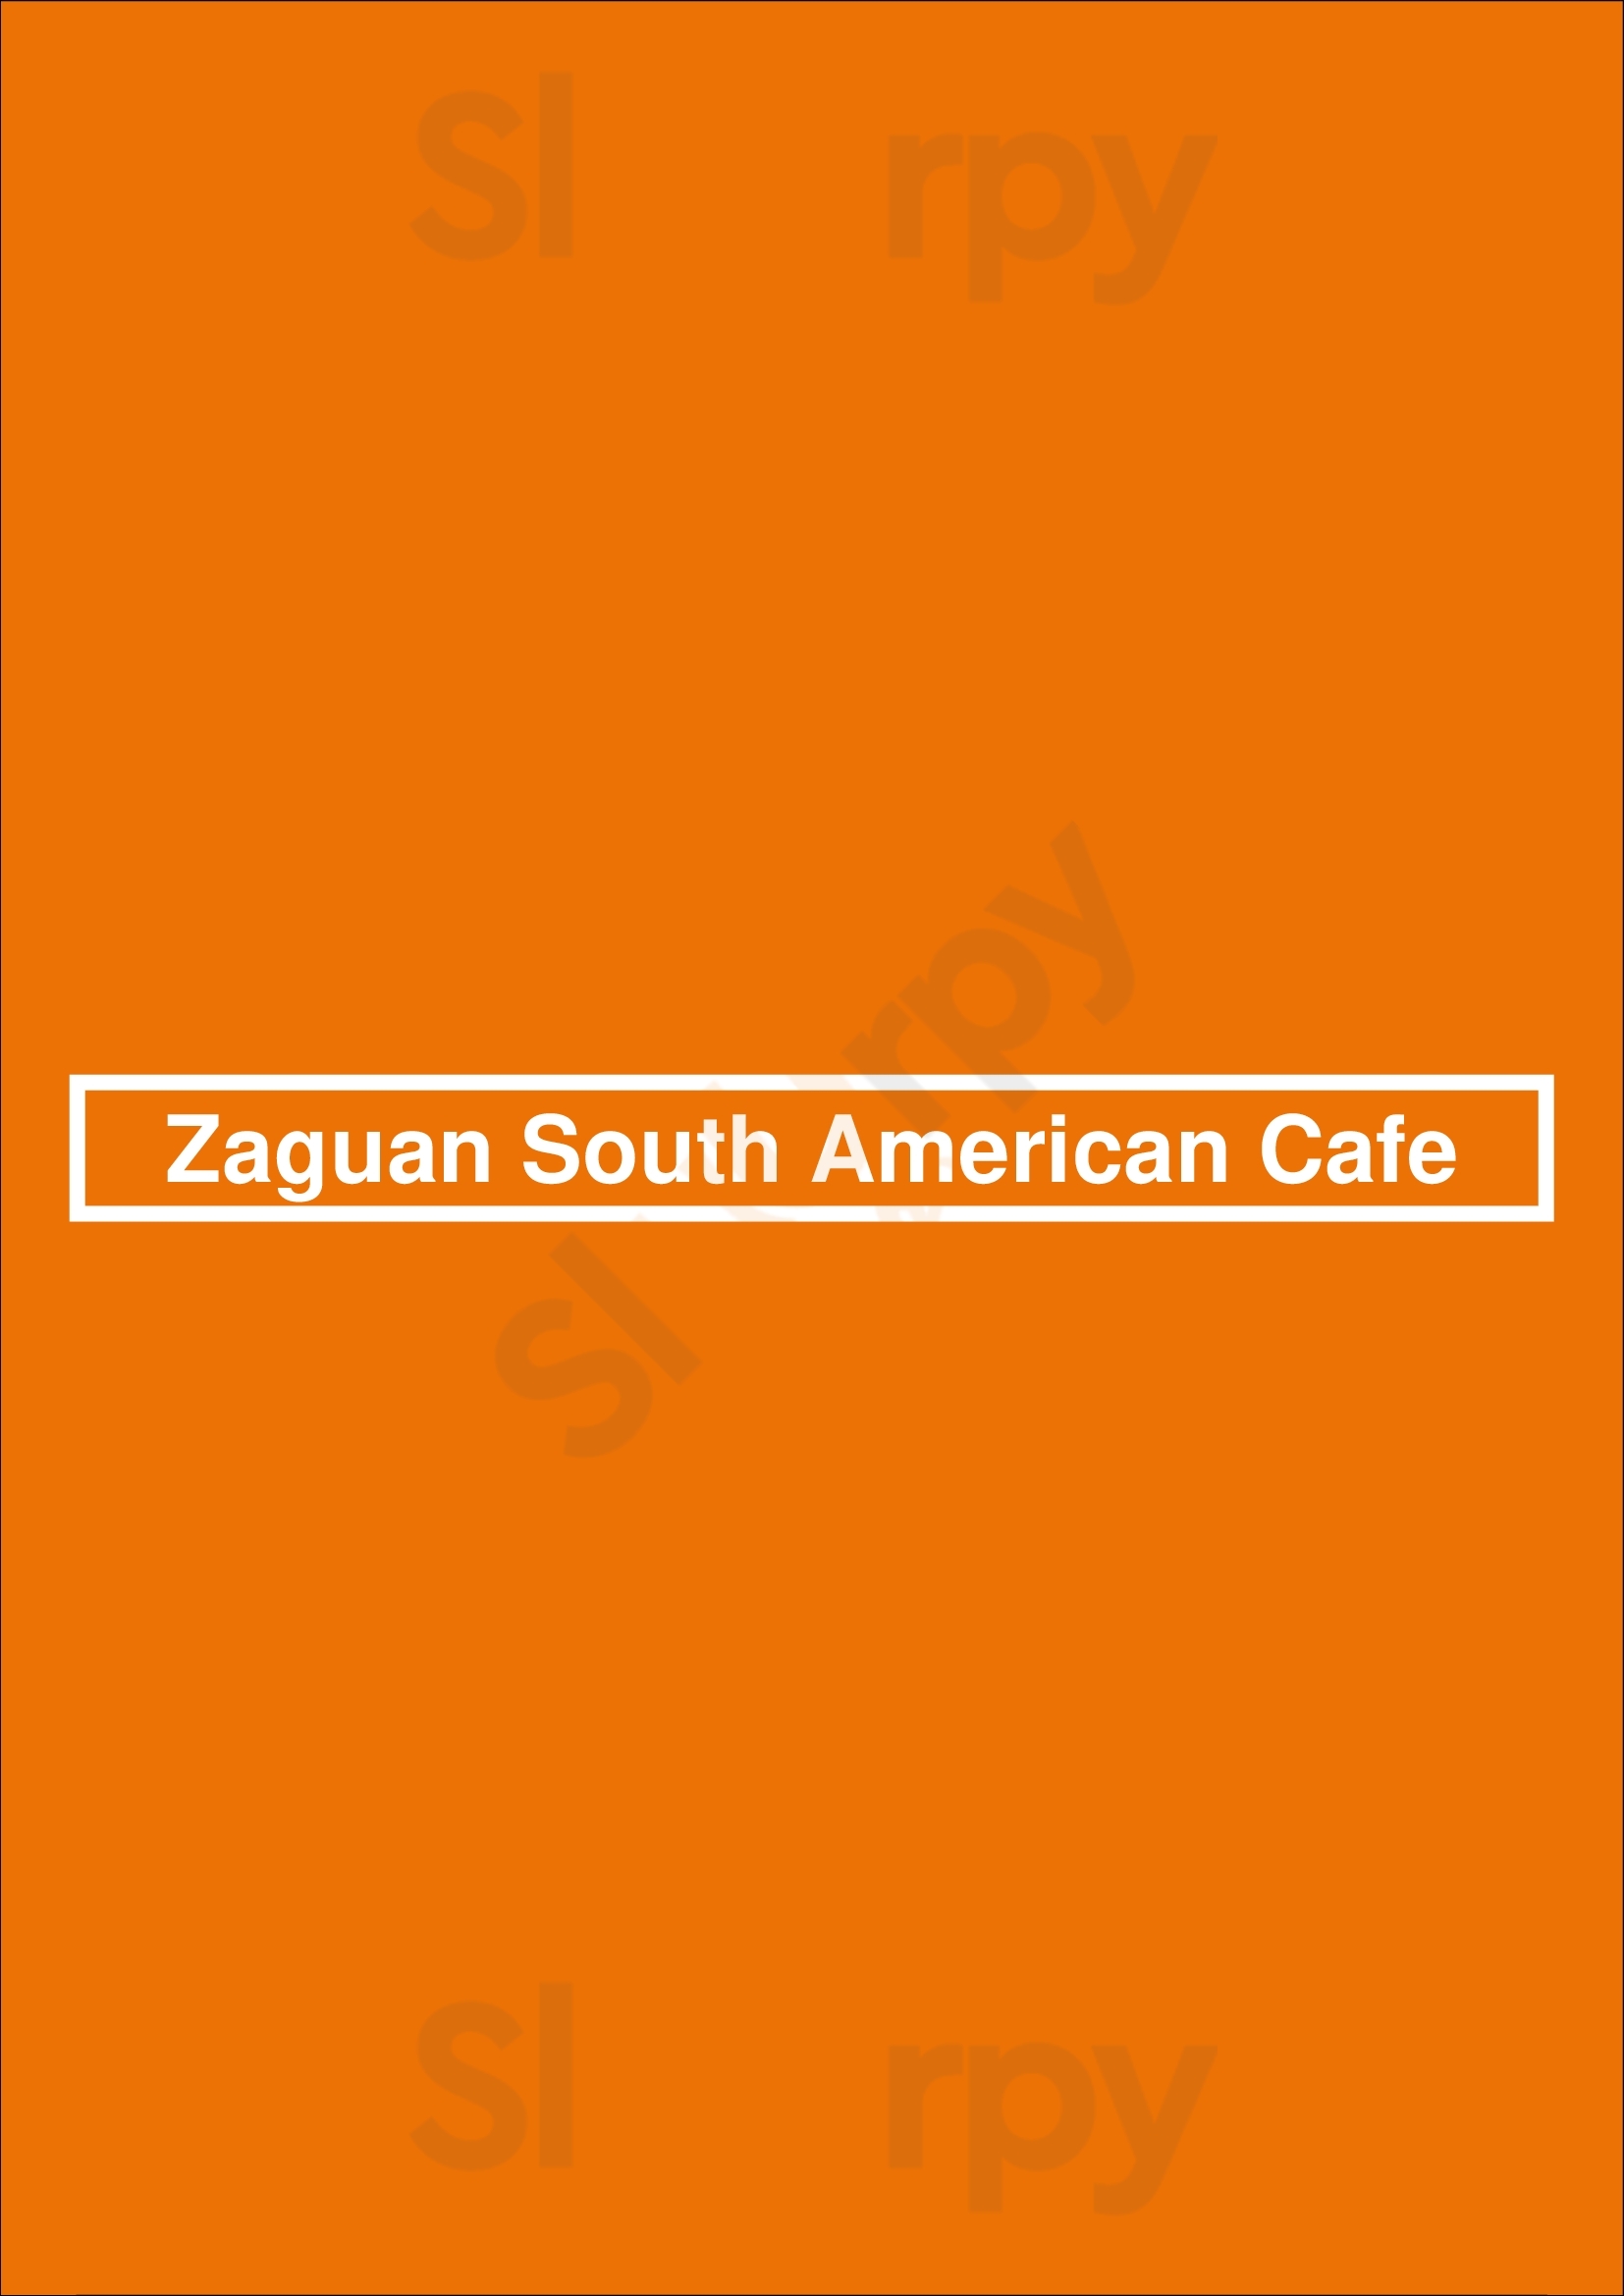 Zaguan South American Cafe Dallas Menu - 1